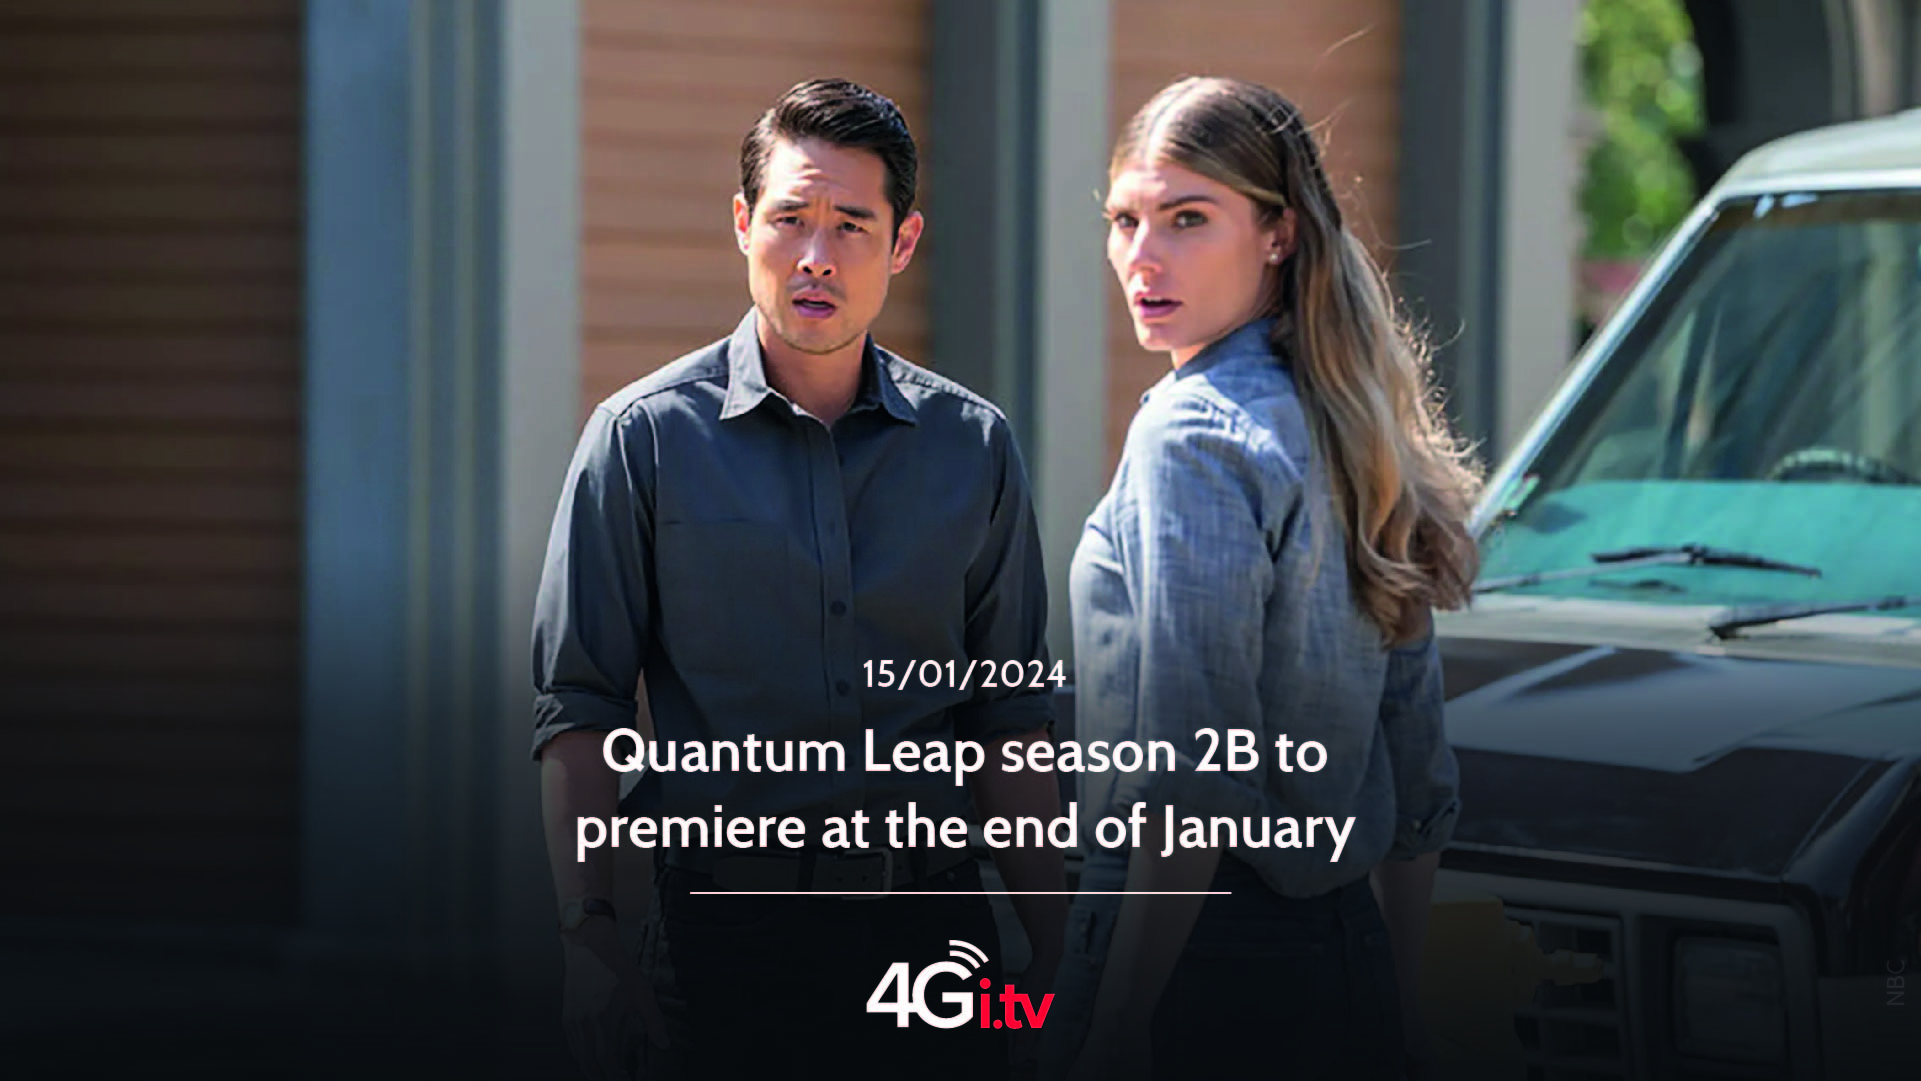 Lesen Sie mehr über den Artikel Quantum Leap season 2B to premiere at the end of January